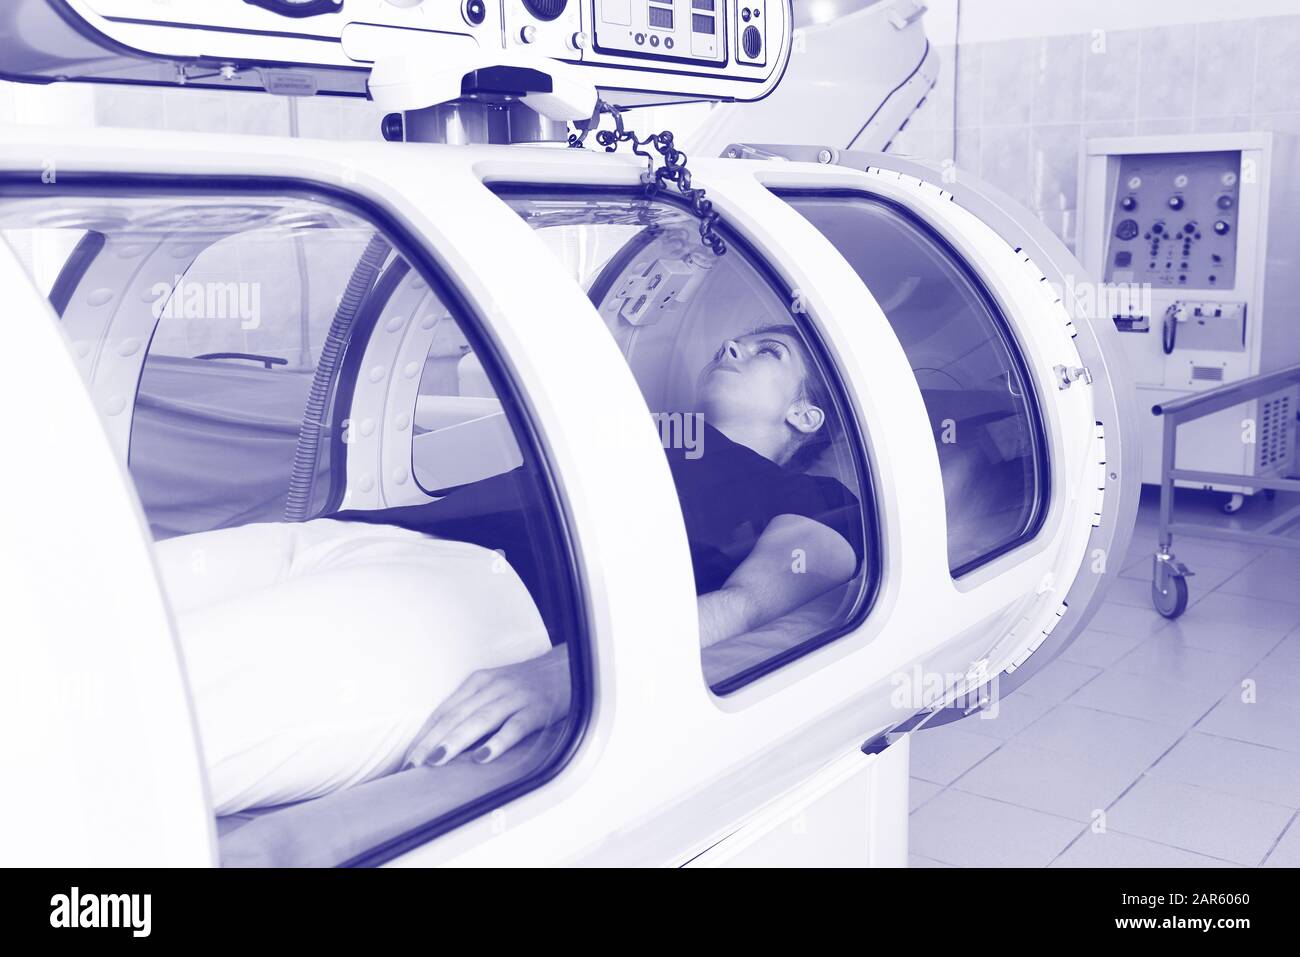 Chambre hyperbare d'oxygène dans un hôpital Photo Stock - Alamy